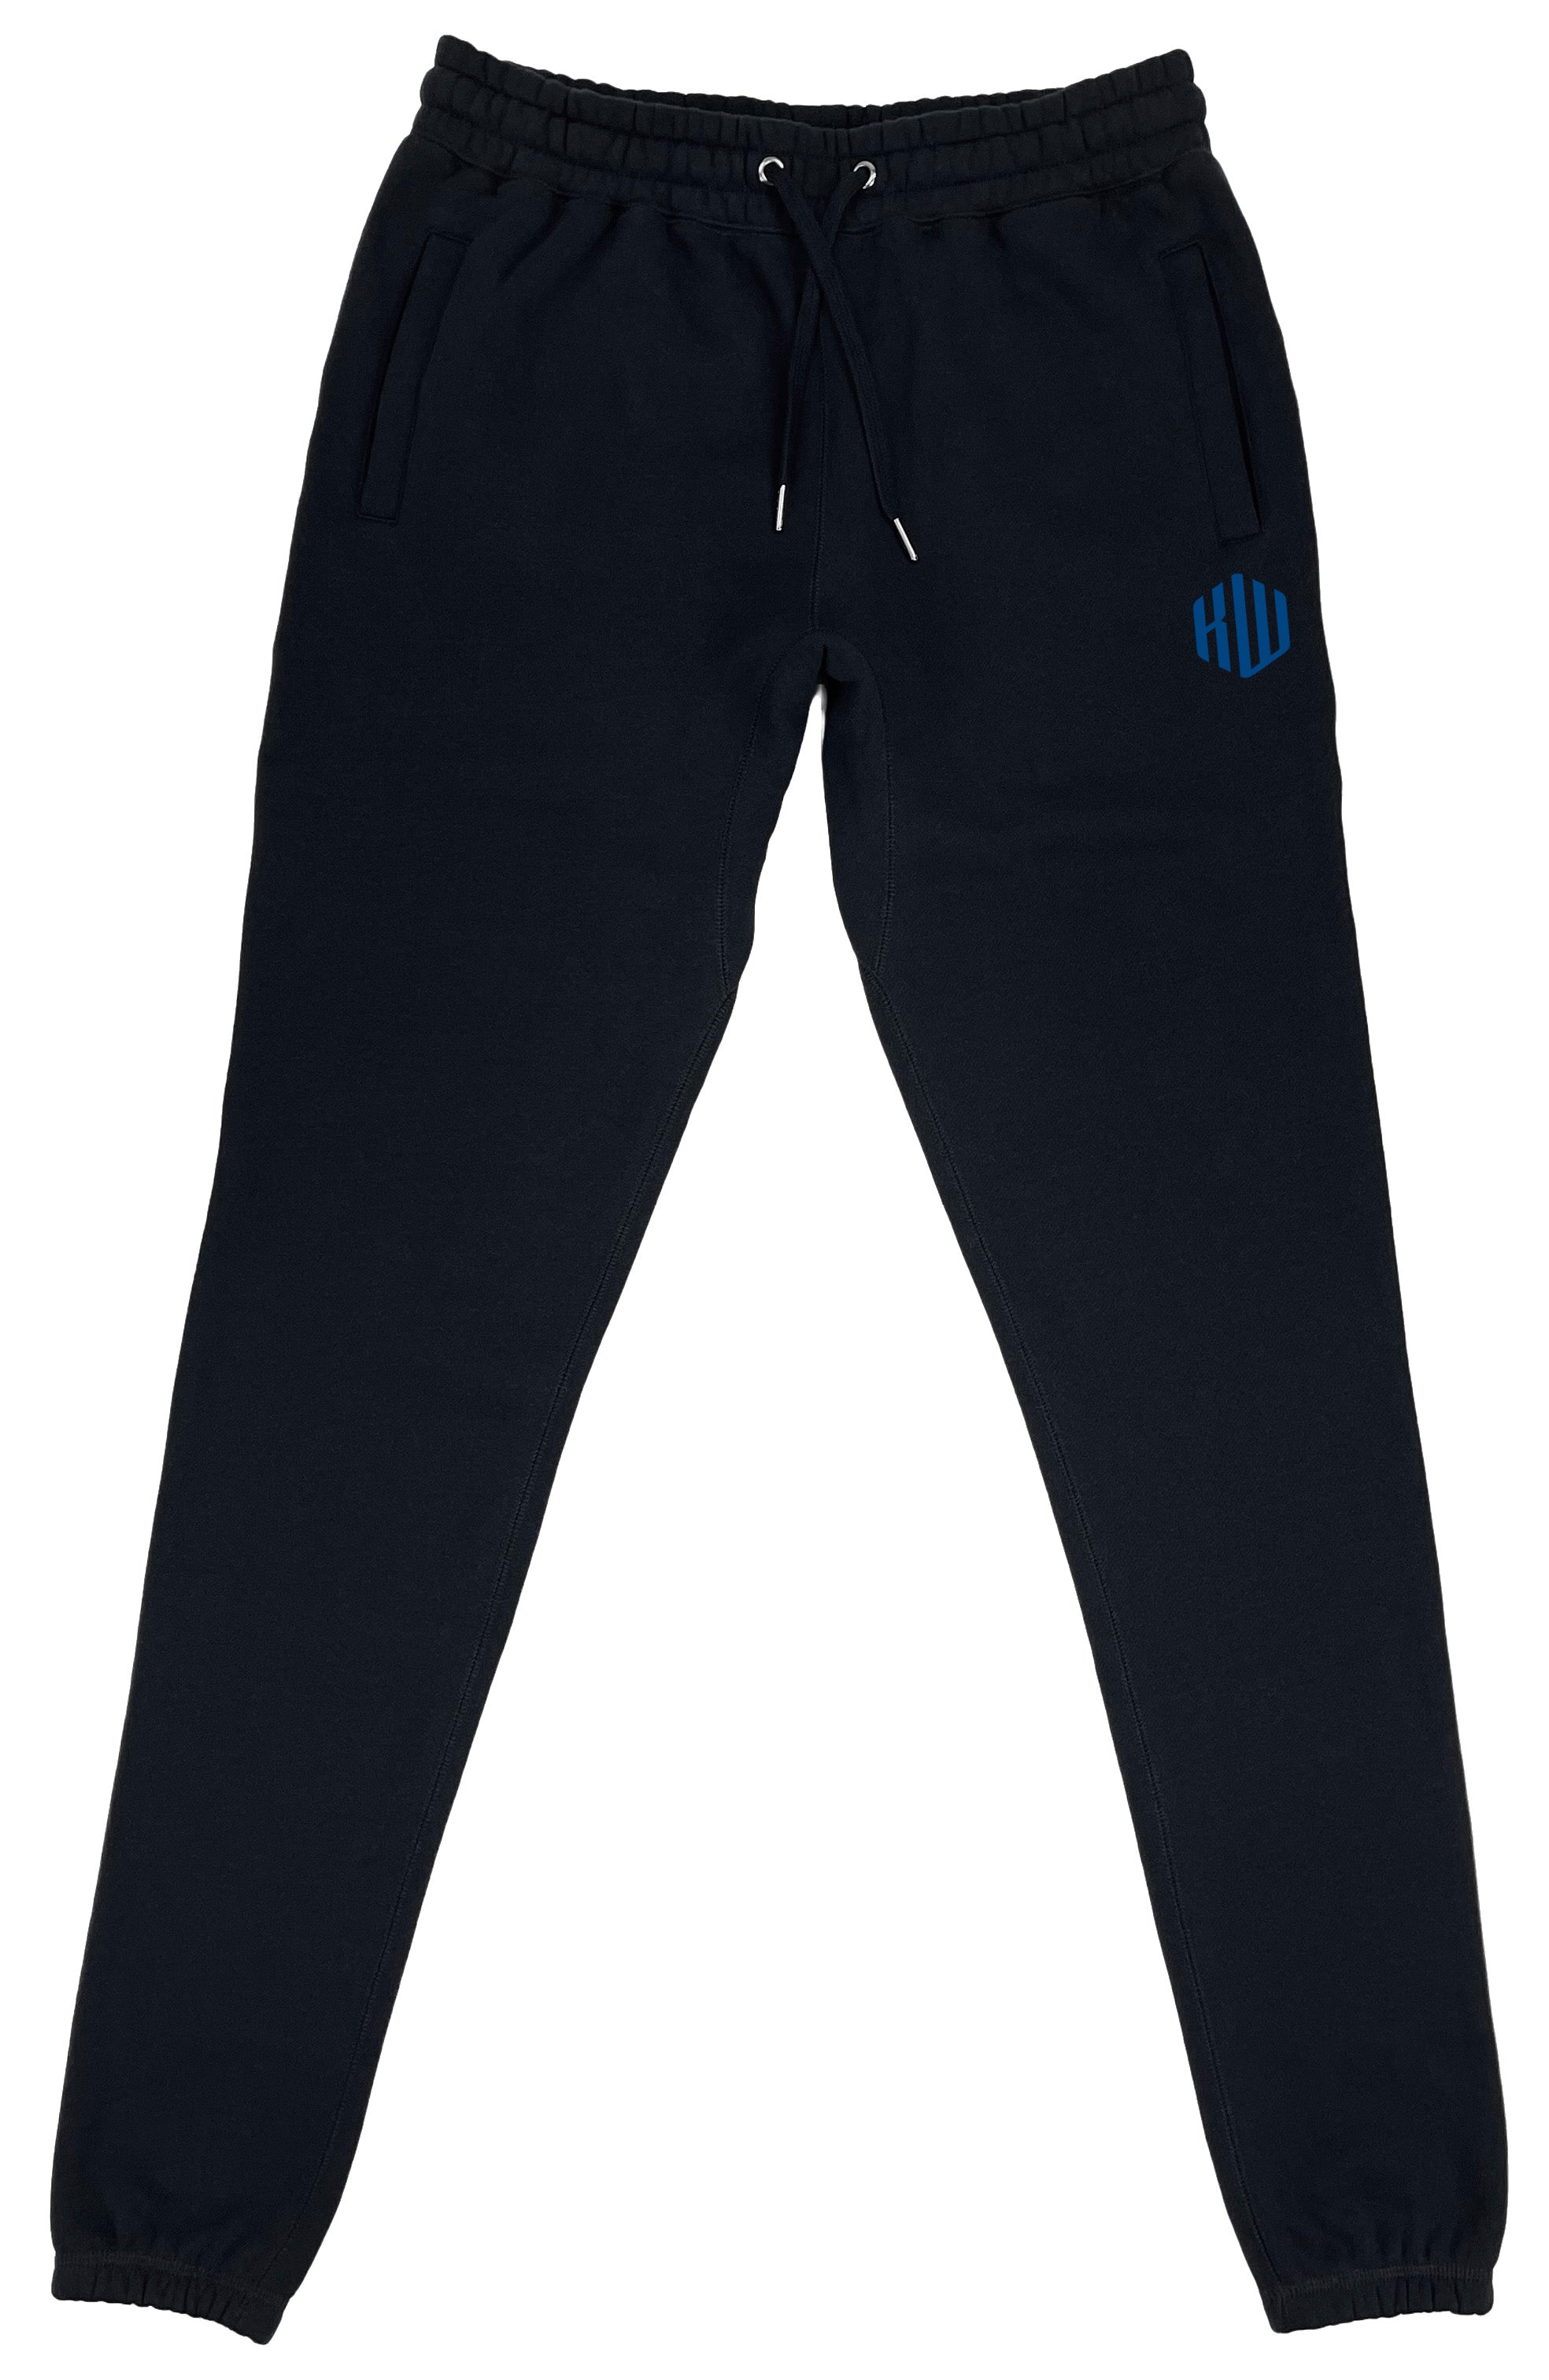 Lettermark Sweatpants (Black) - Kingdom & Will